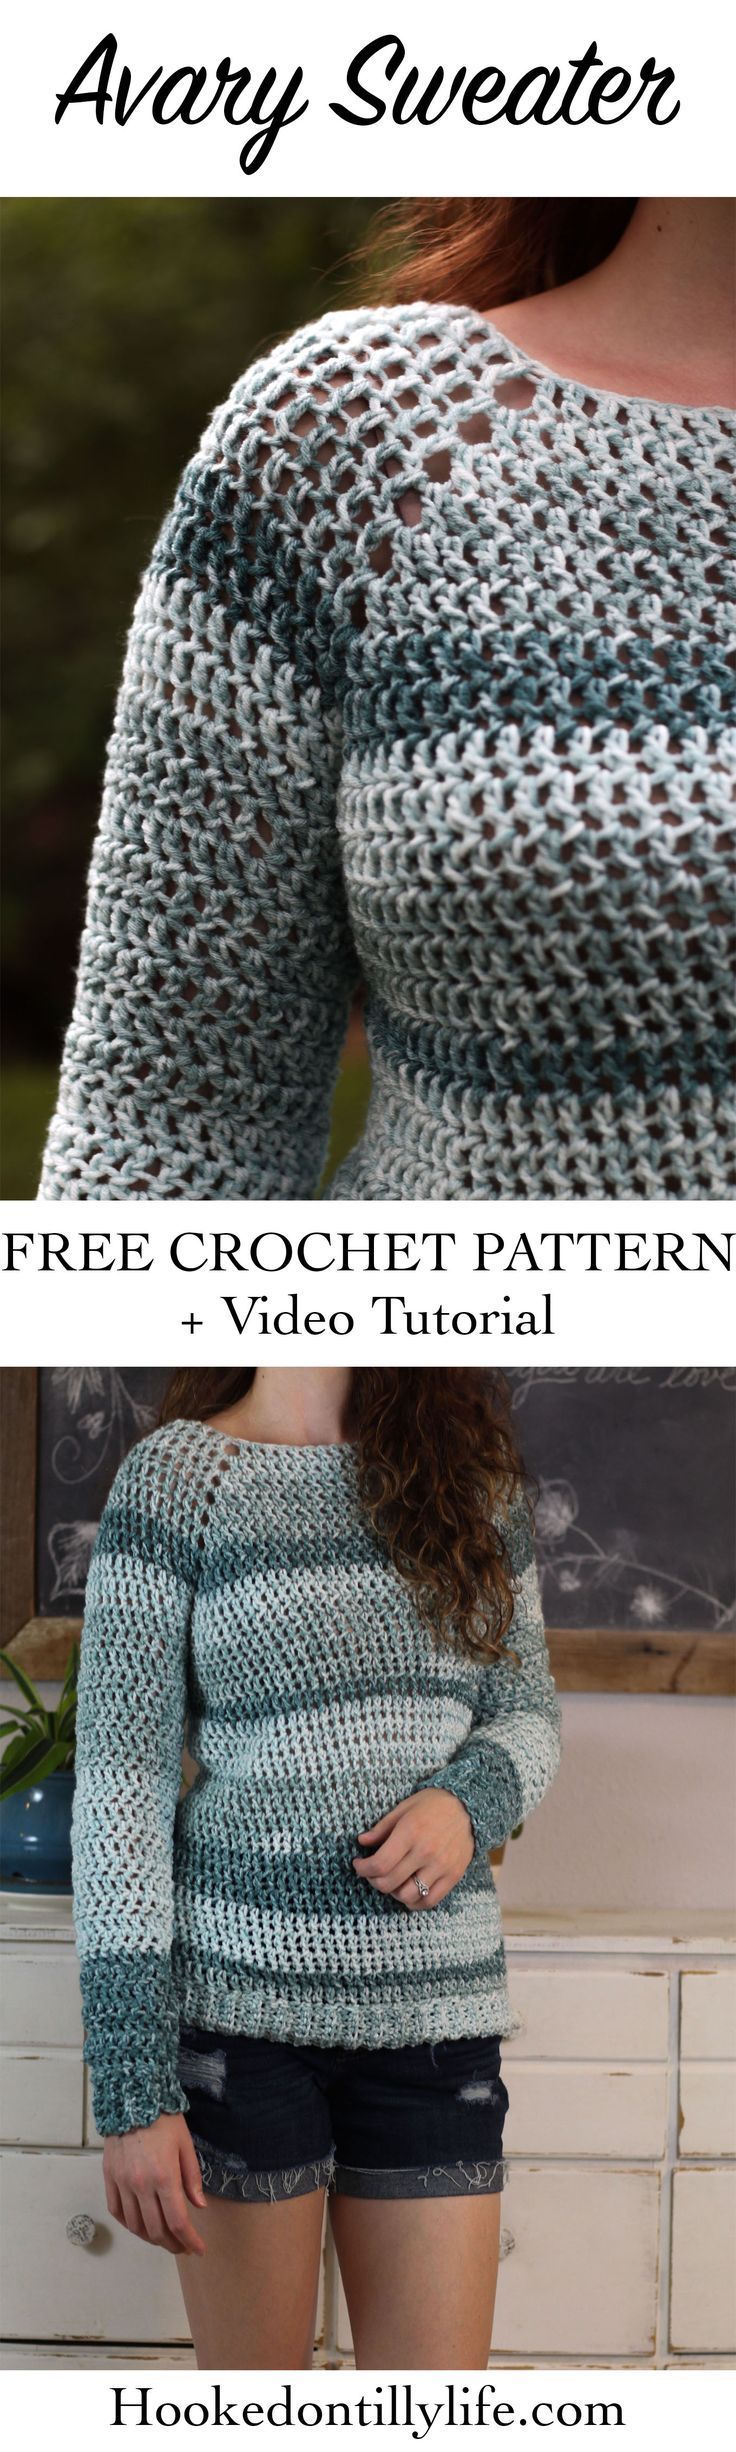 The Avary Sweater - Free Crochet Pattern